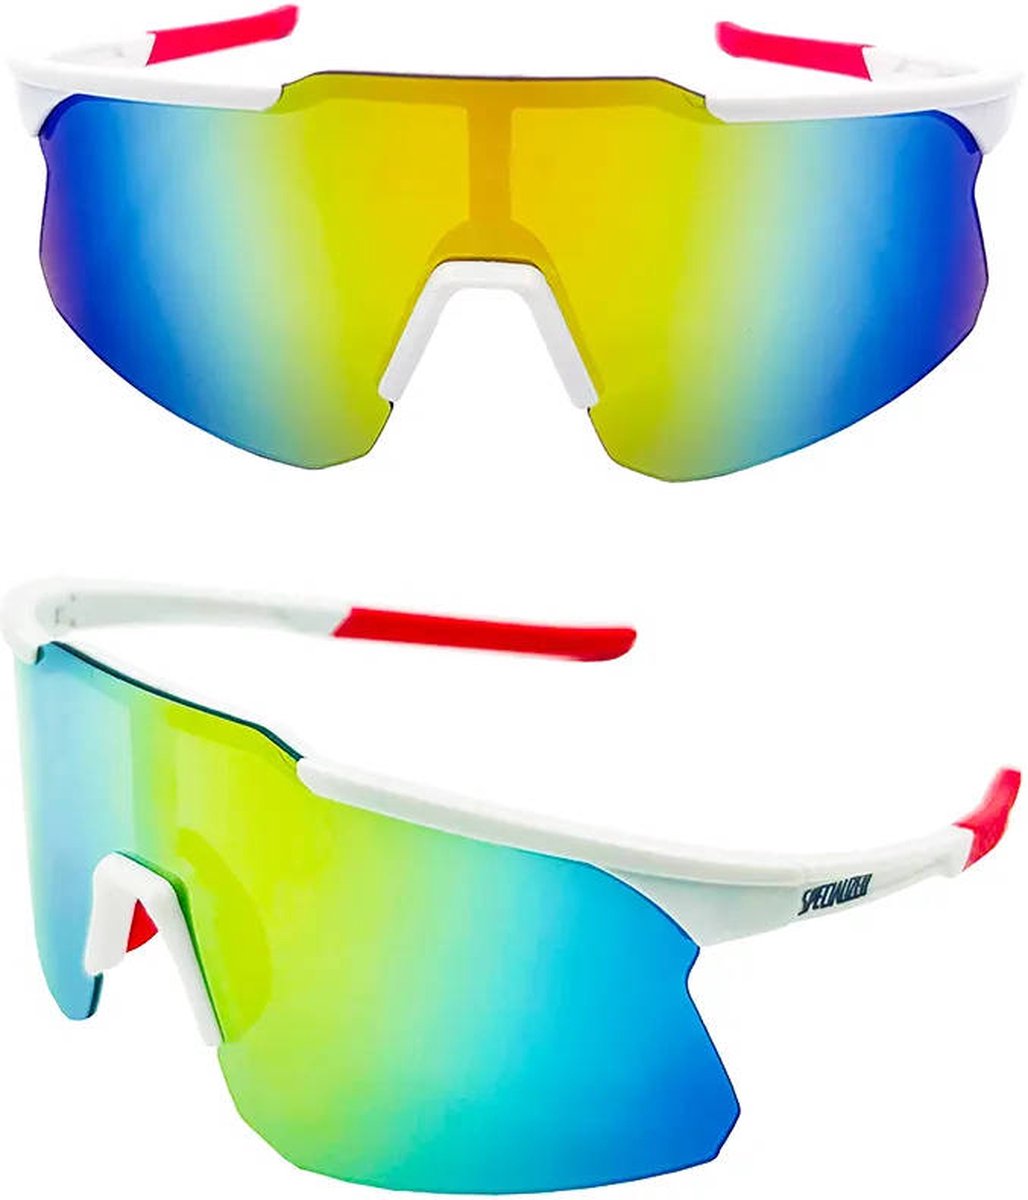 Specialized Fietsbril - Racefiets - Sportbril - Mountainbike - Unisex - UV-bescherming - 155mm - Wit Groen